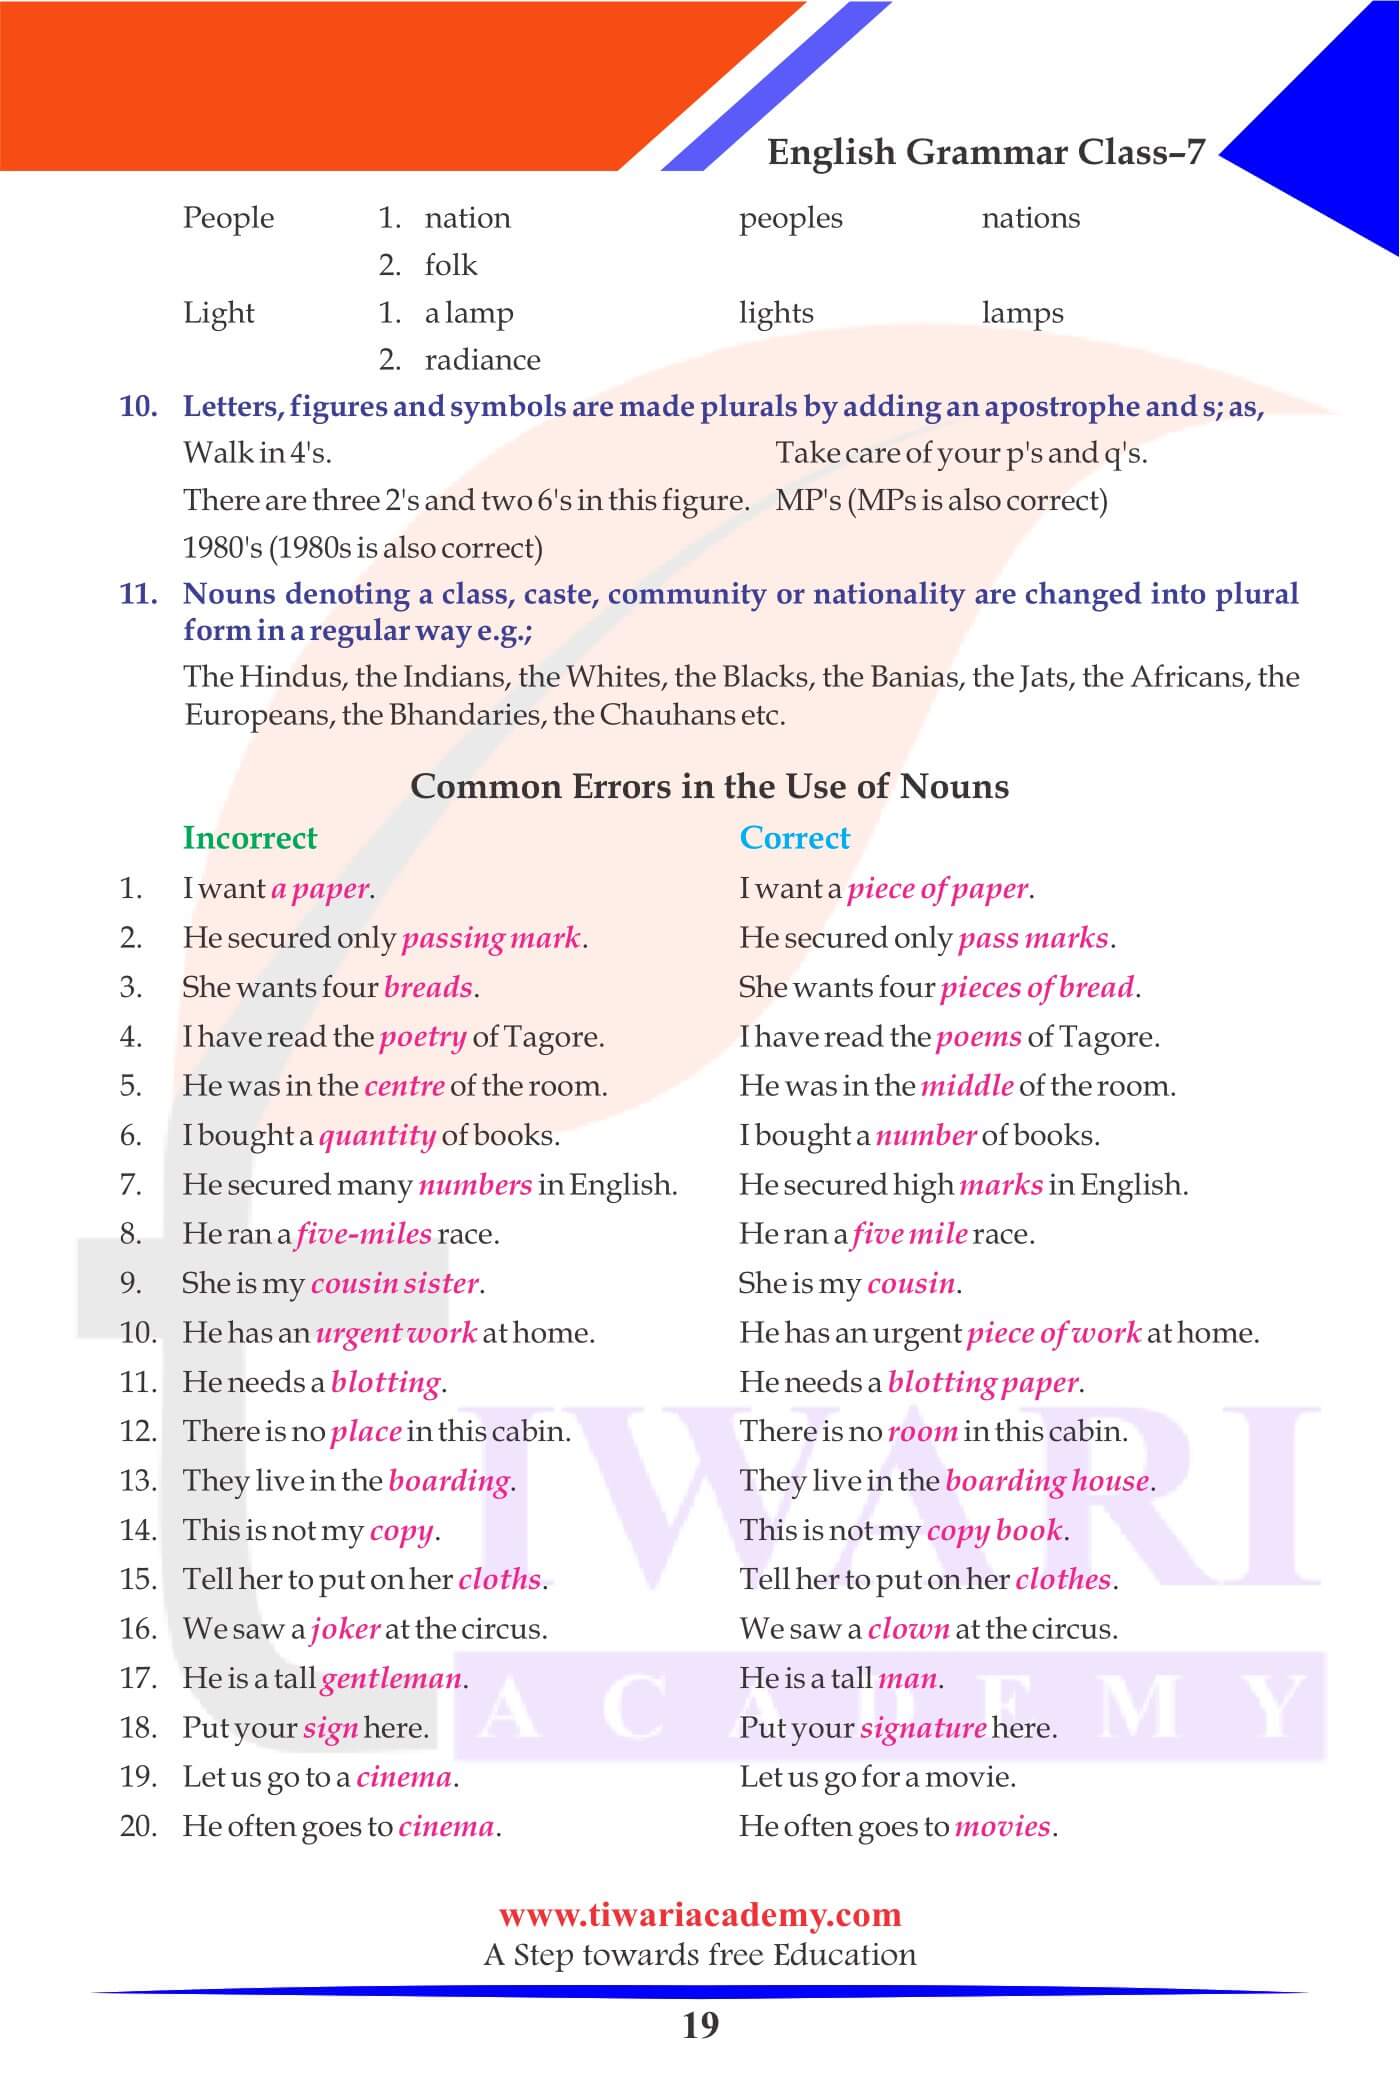 Class 7 Grammar Chapter 3 Revision questions